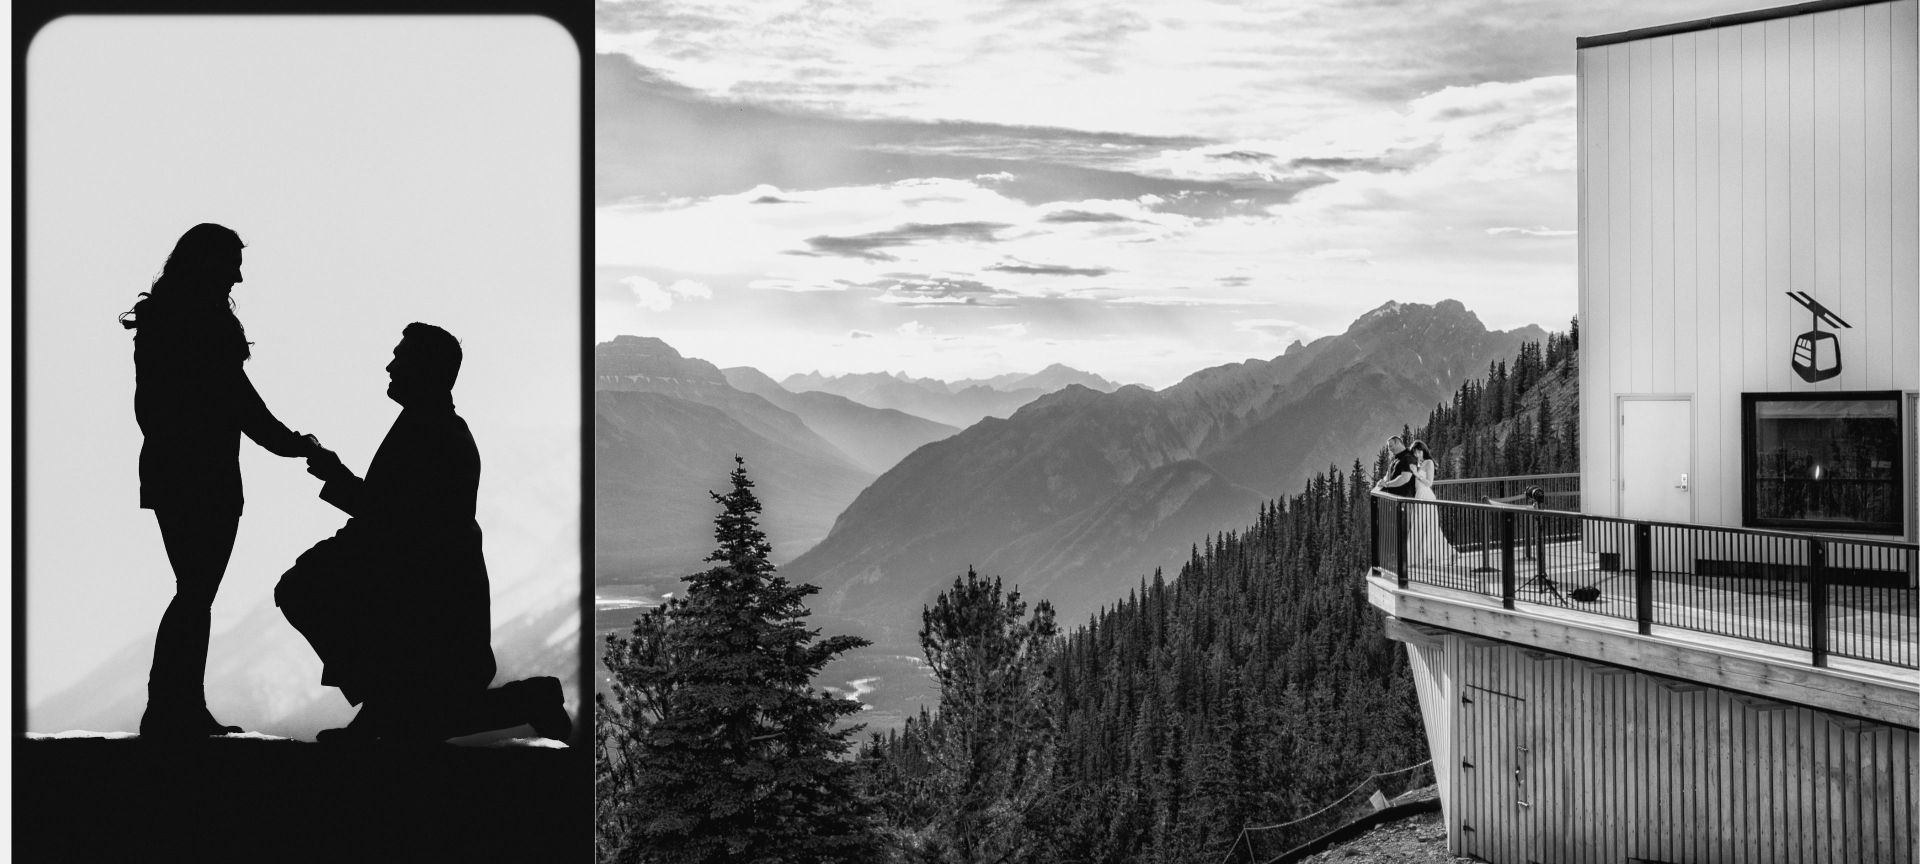 Banff Proposal - Artistic black & white image of surprise proposal in Banff national park